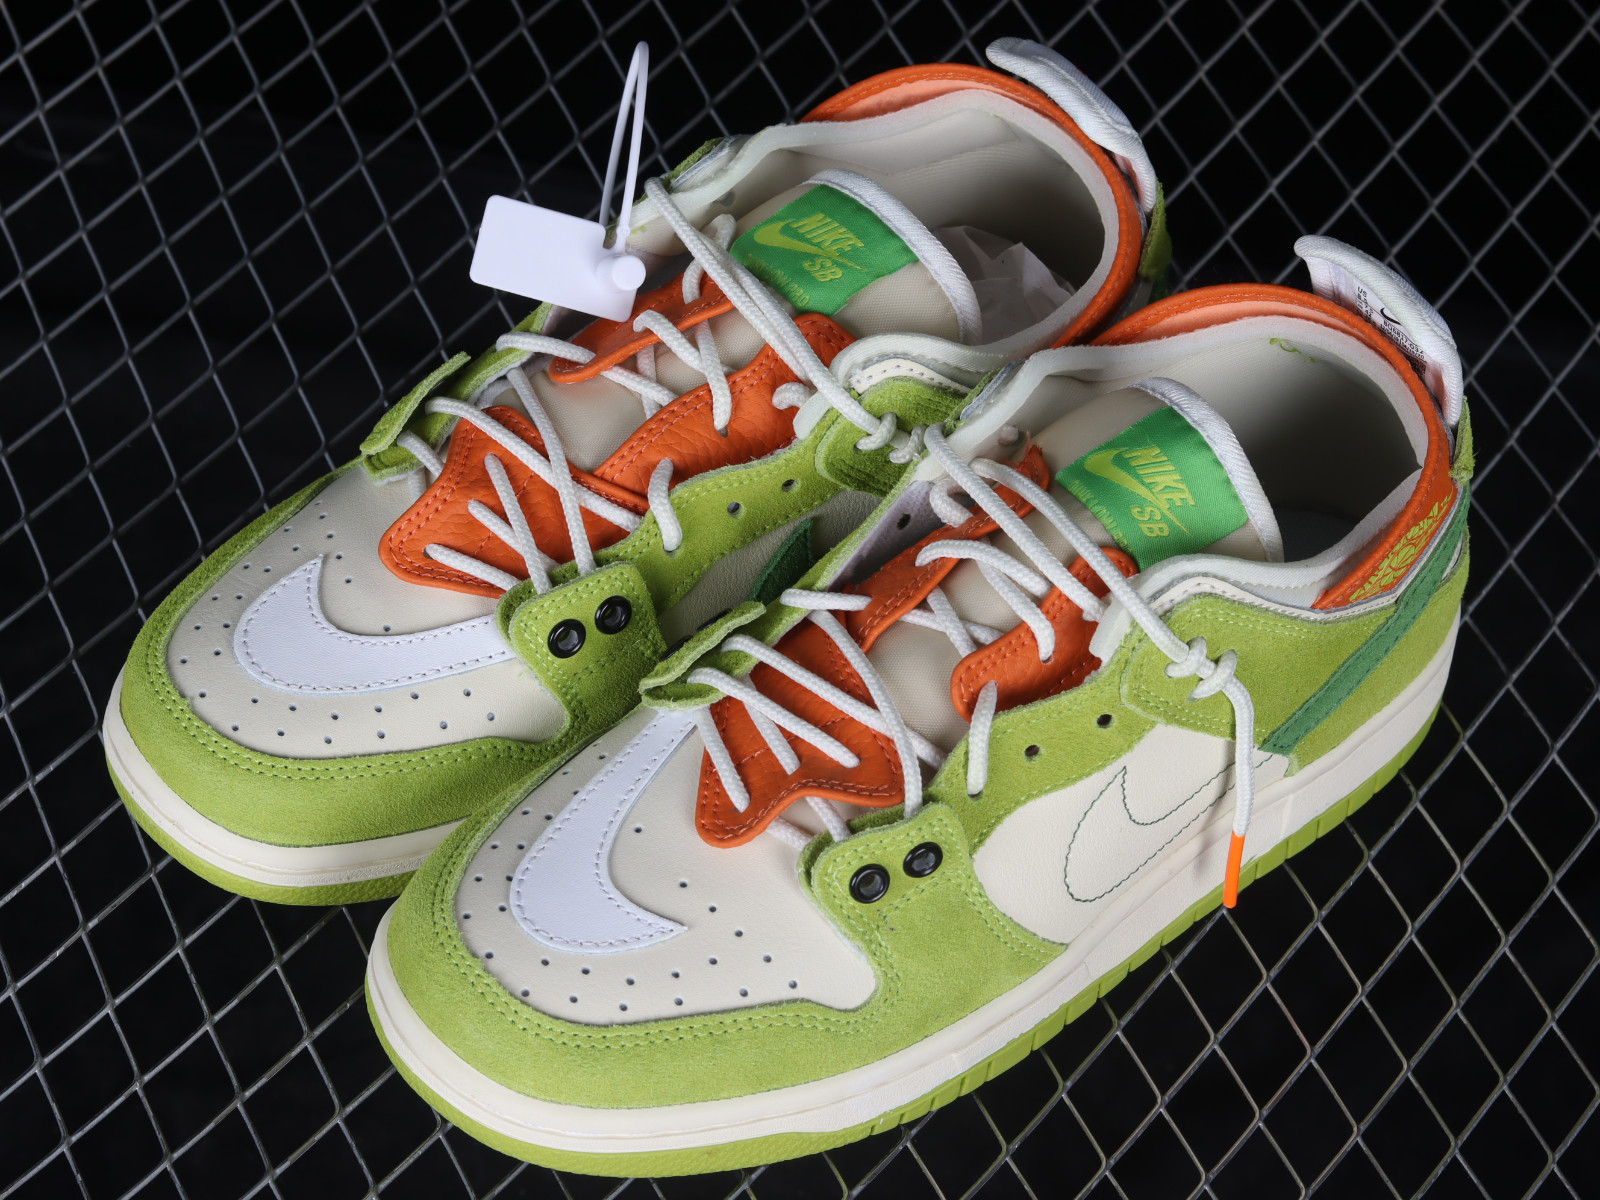 nike lebron 9 price in dubai live match - Nike Low PRO White Green Orange BQ6817 - MultiscaleconsultingShops -